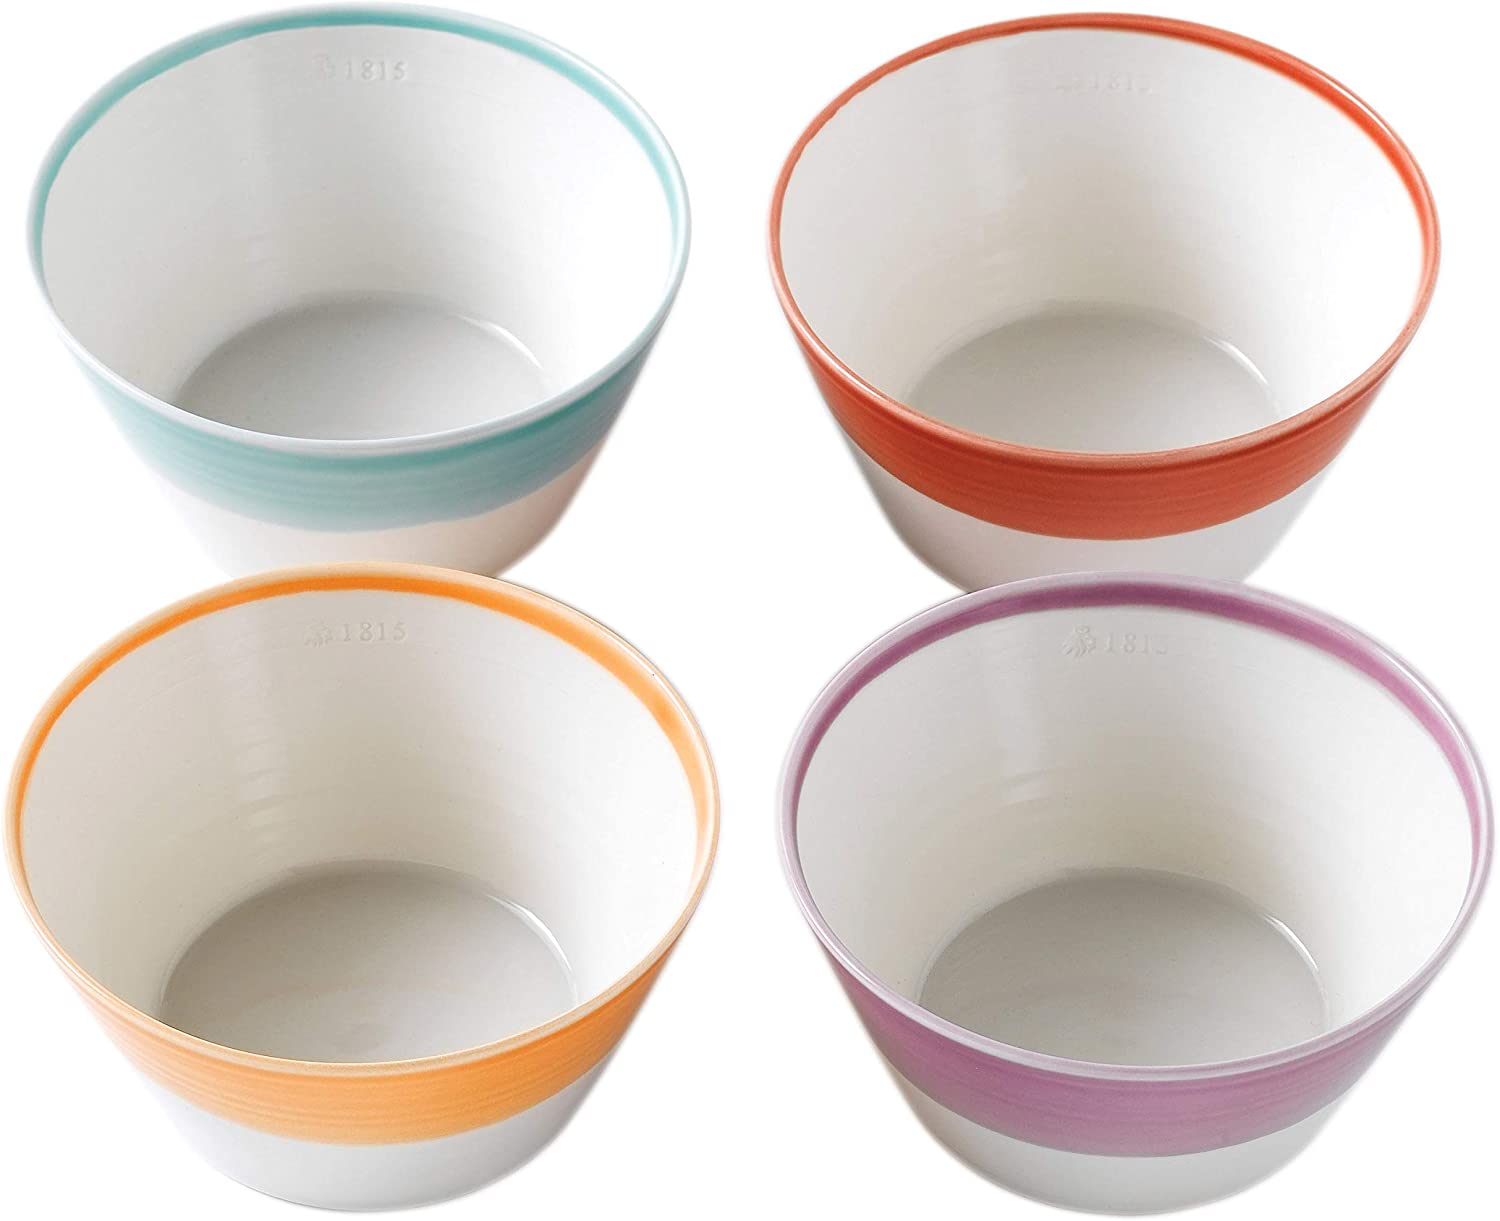 Royal Doulton Porcelain 1815 Brights Cereal Bowl, Set of 4, Multi-Colour